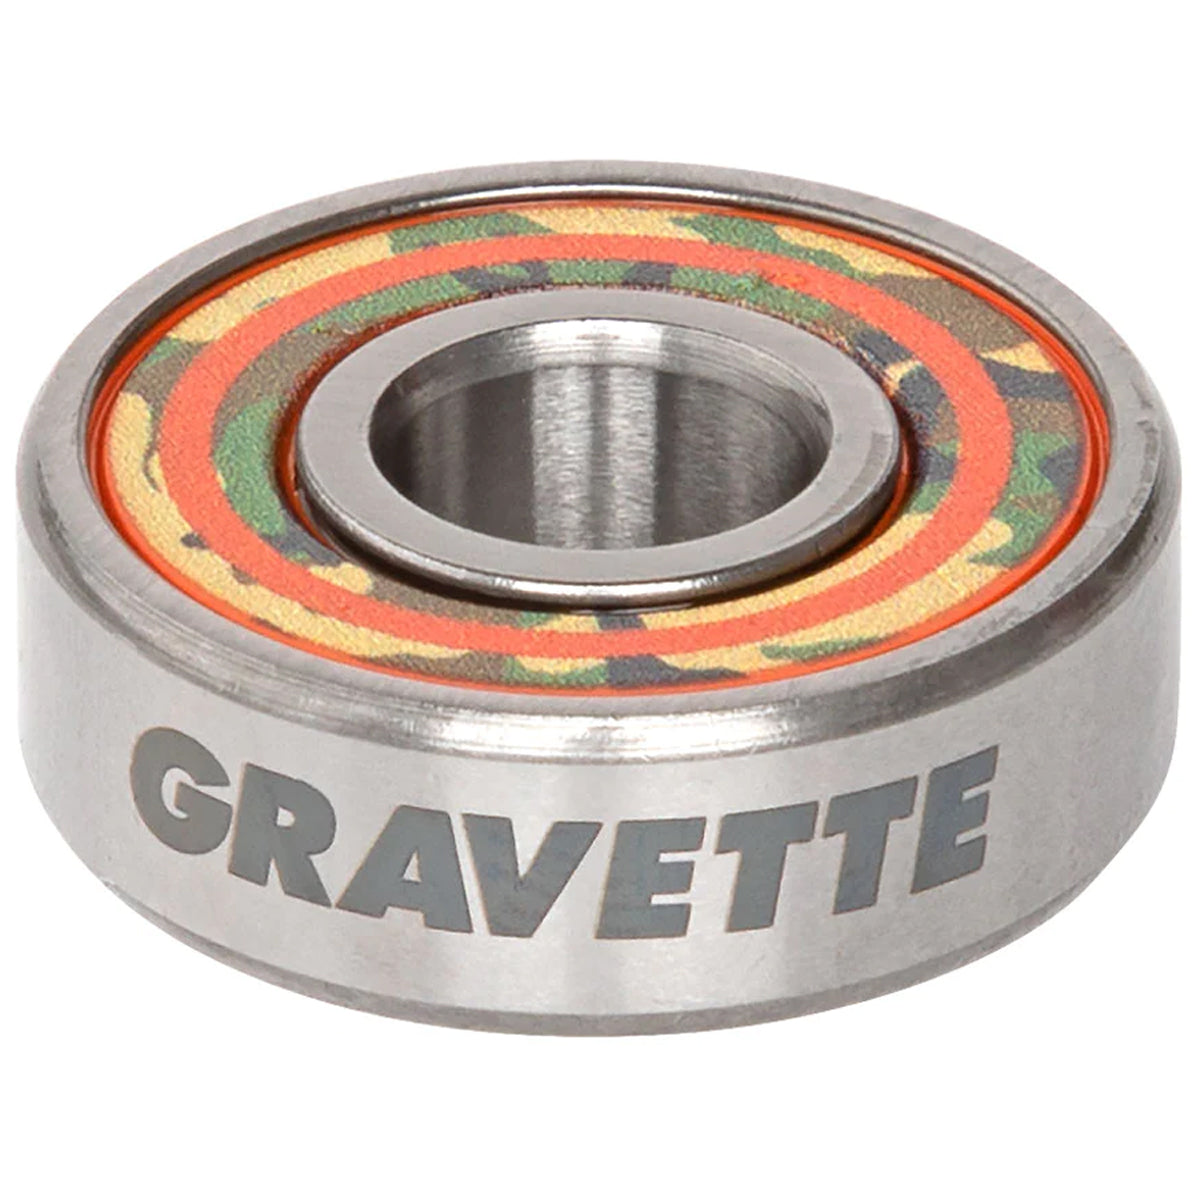 Bronson David Gravette Pro G3 Bearings - Camo image 2